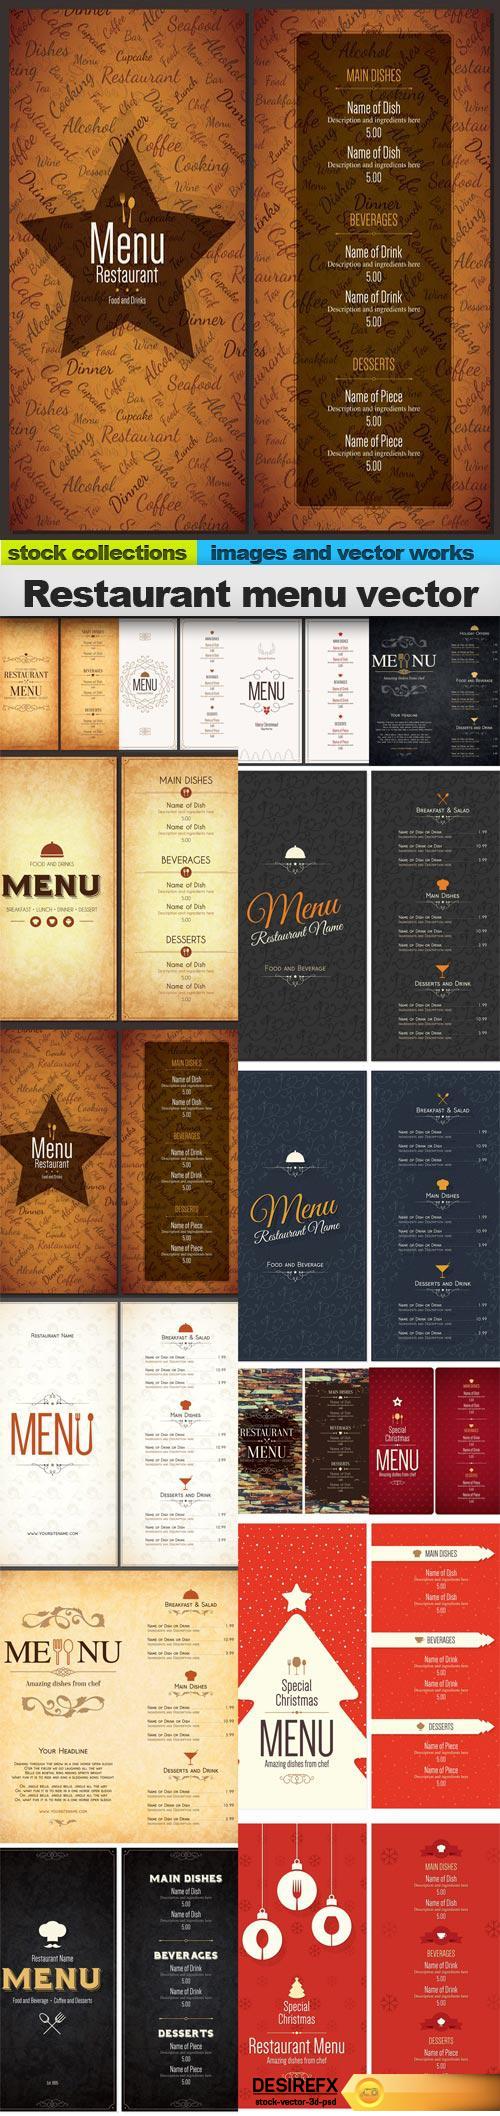 Restaurant menu vector, 15 x EPS 